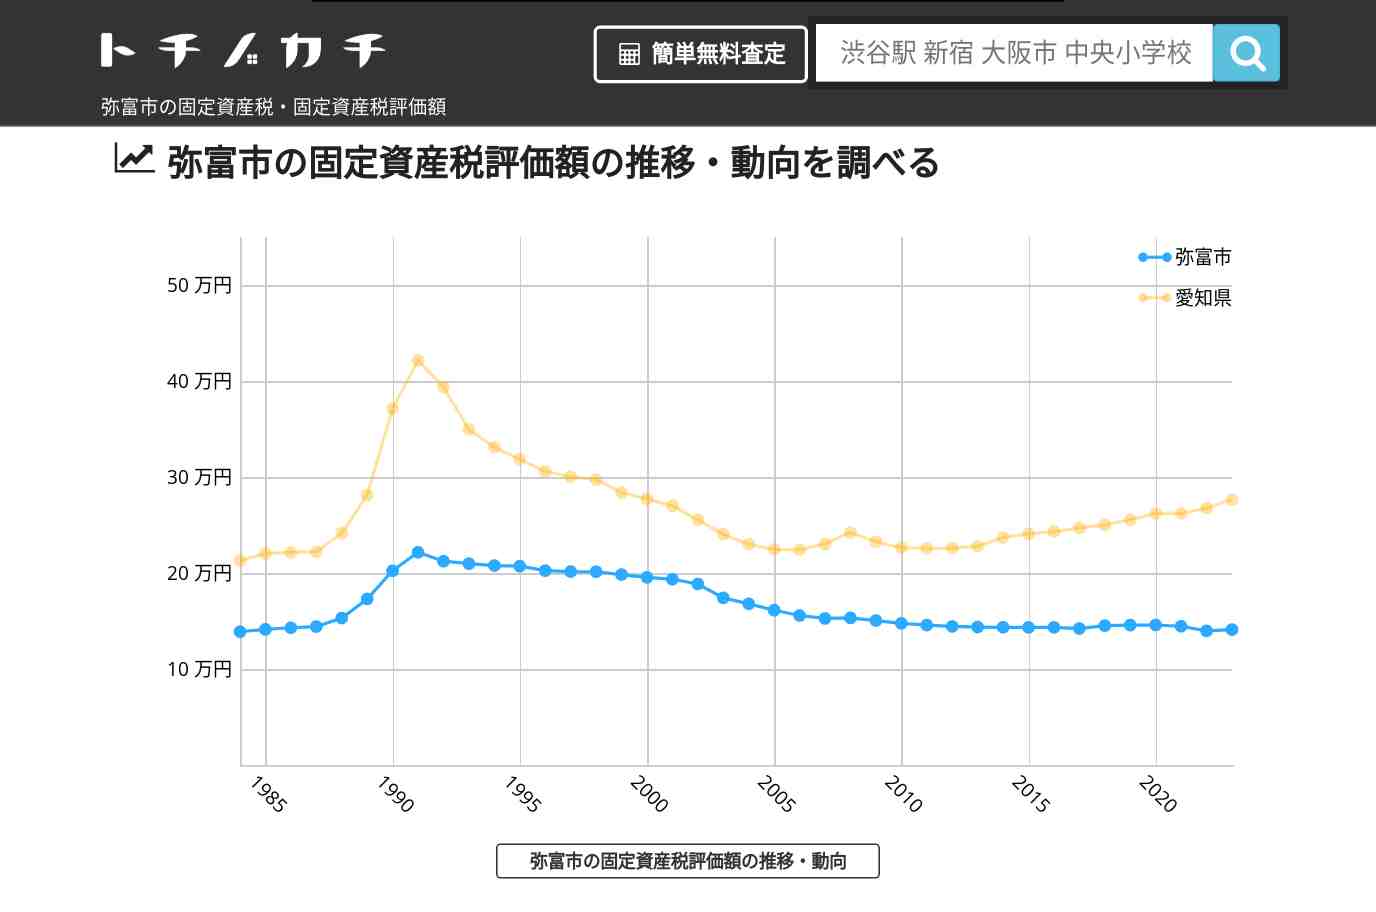 弥富中学校(愛知県 弥富市)周辺の固定資産税・固定資産税評価額 | トチノカチ